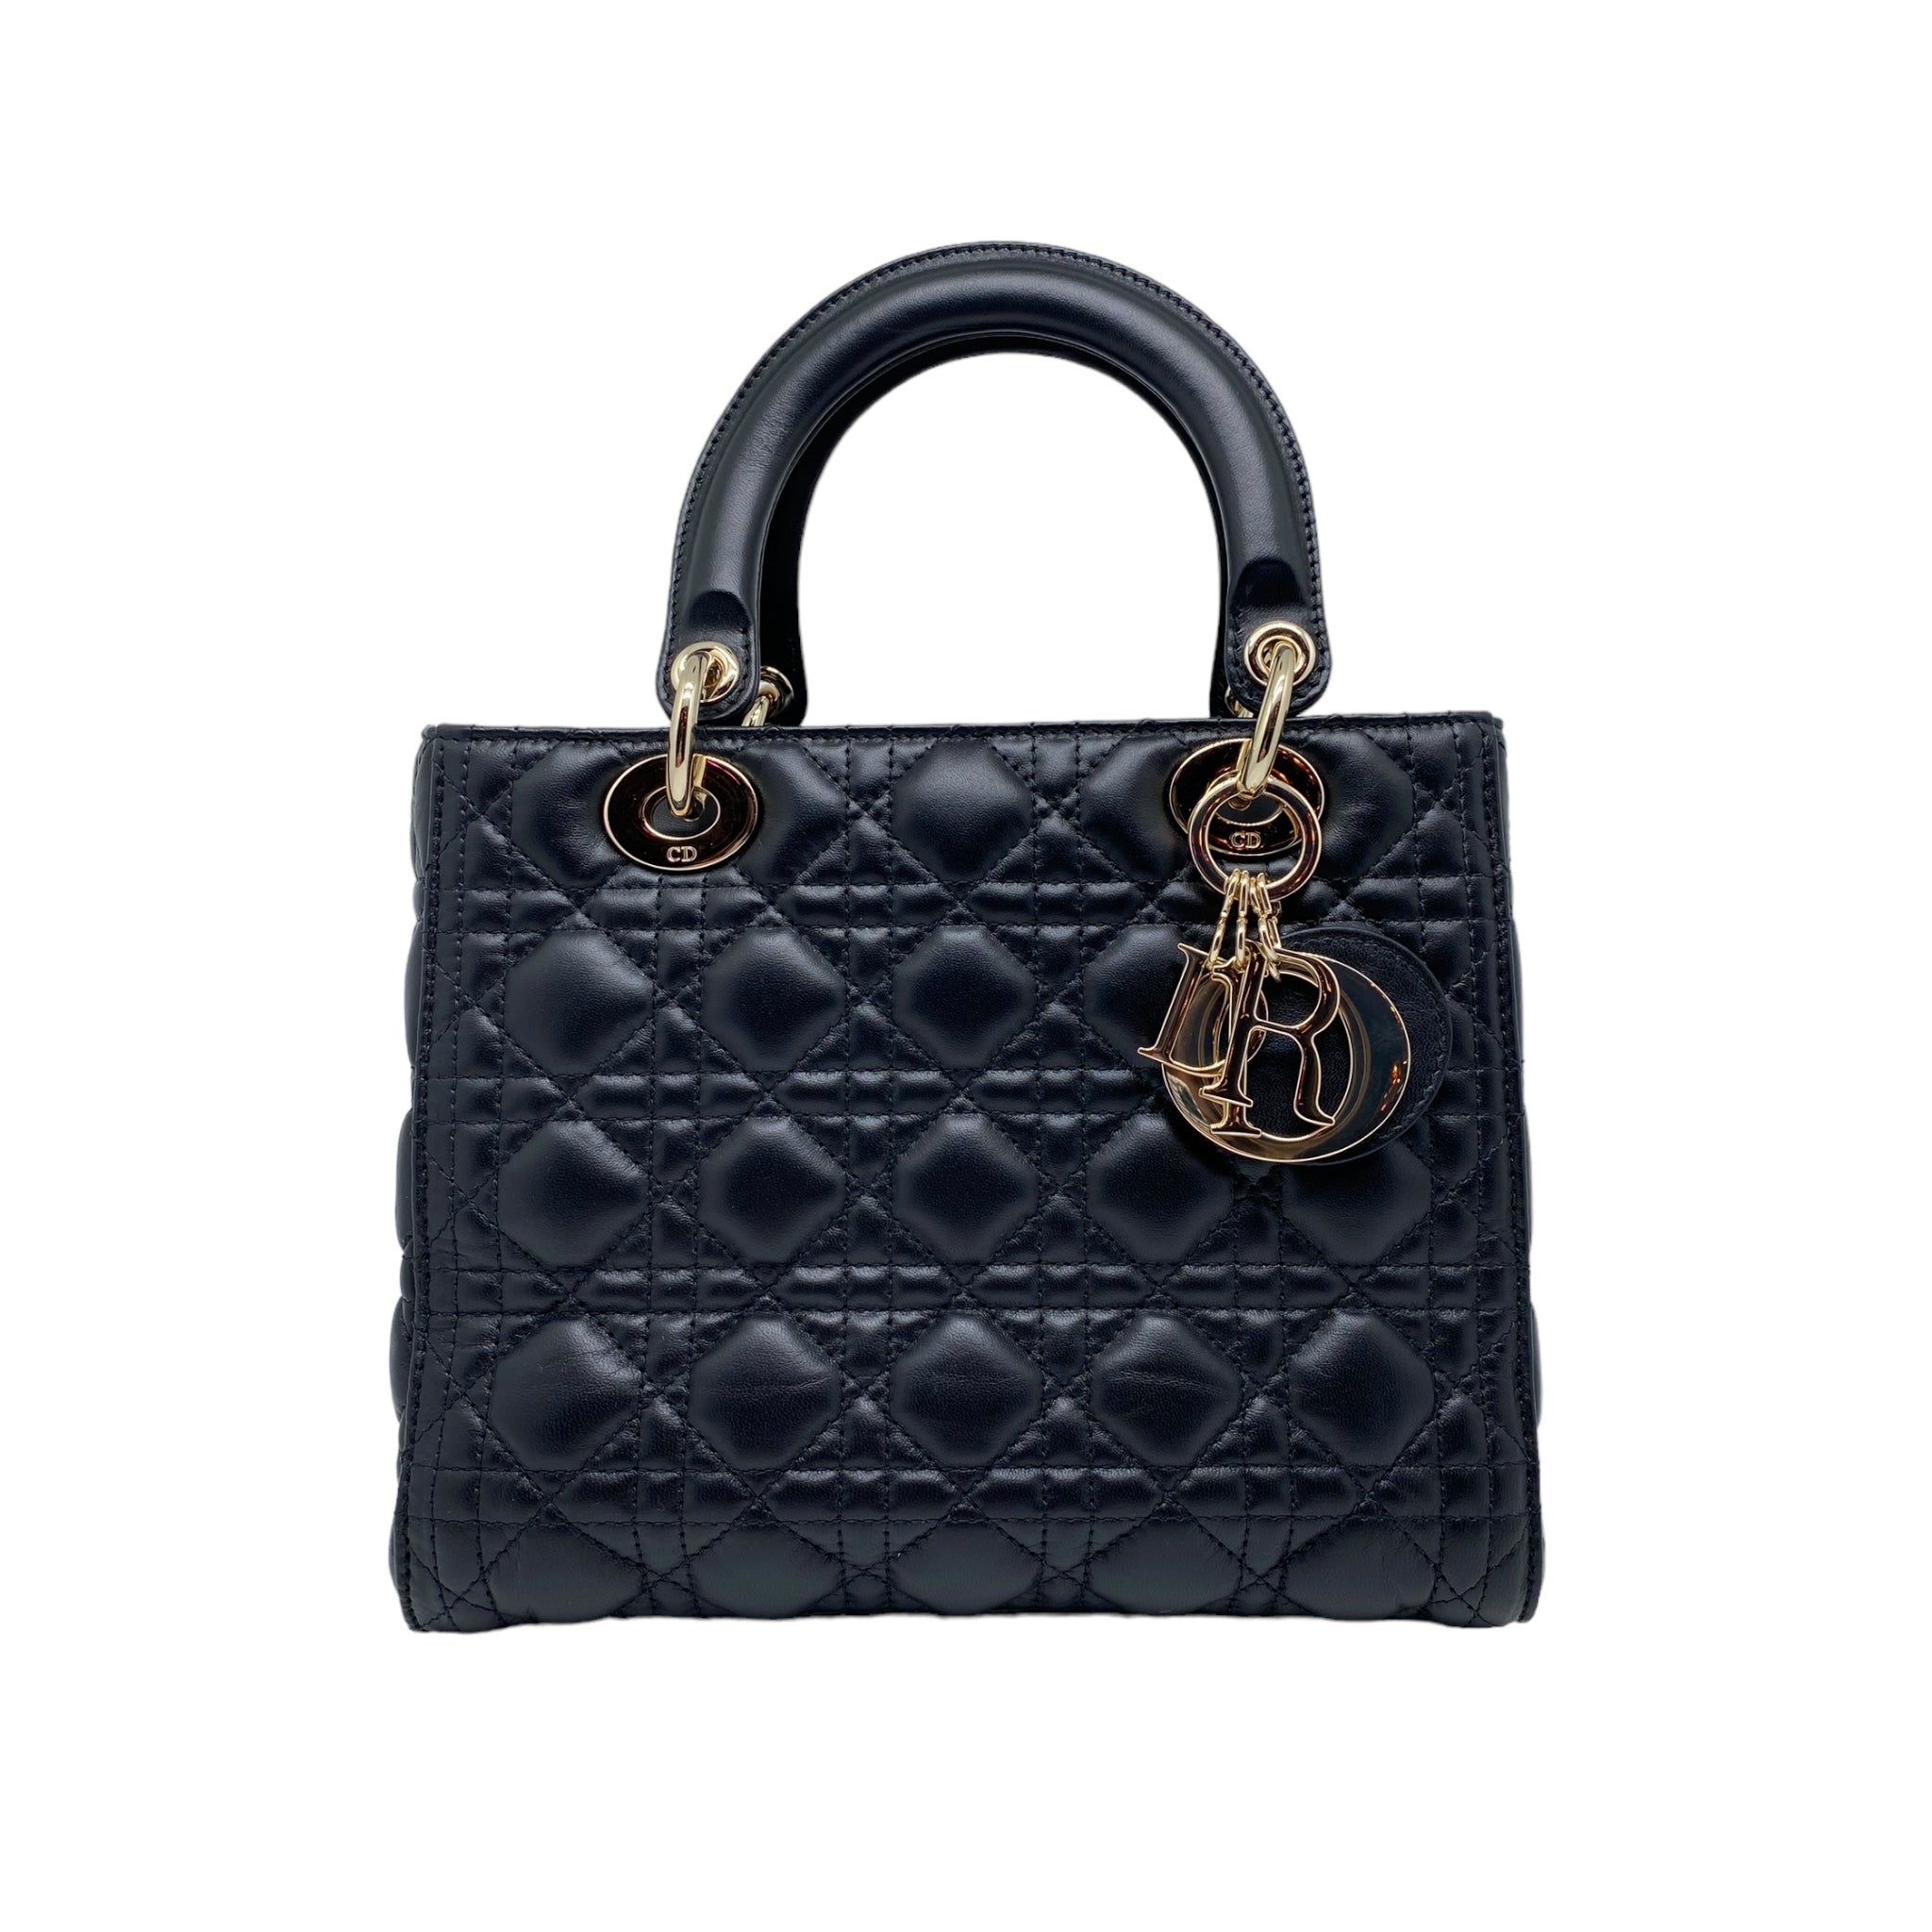 Dior – vintage stuff & luxury bags